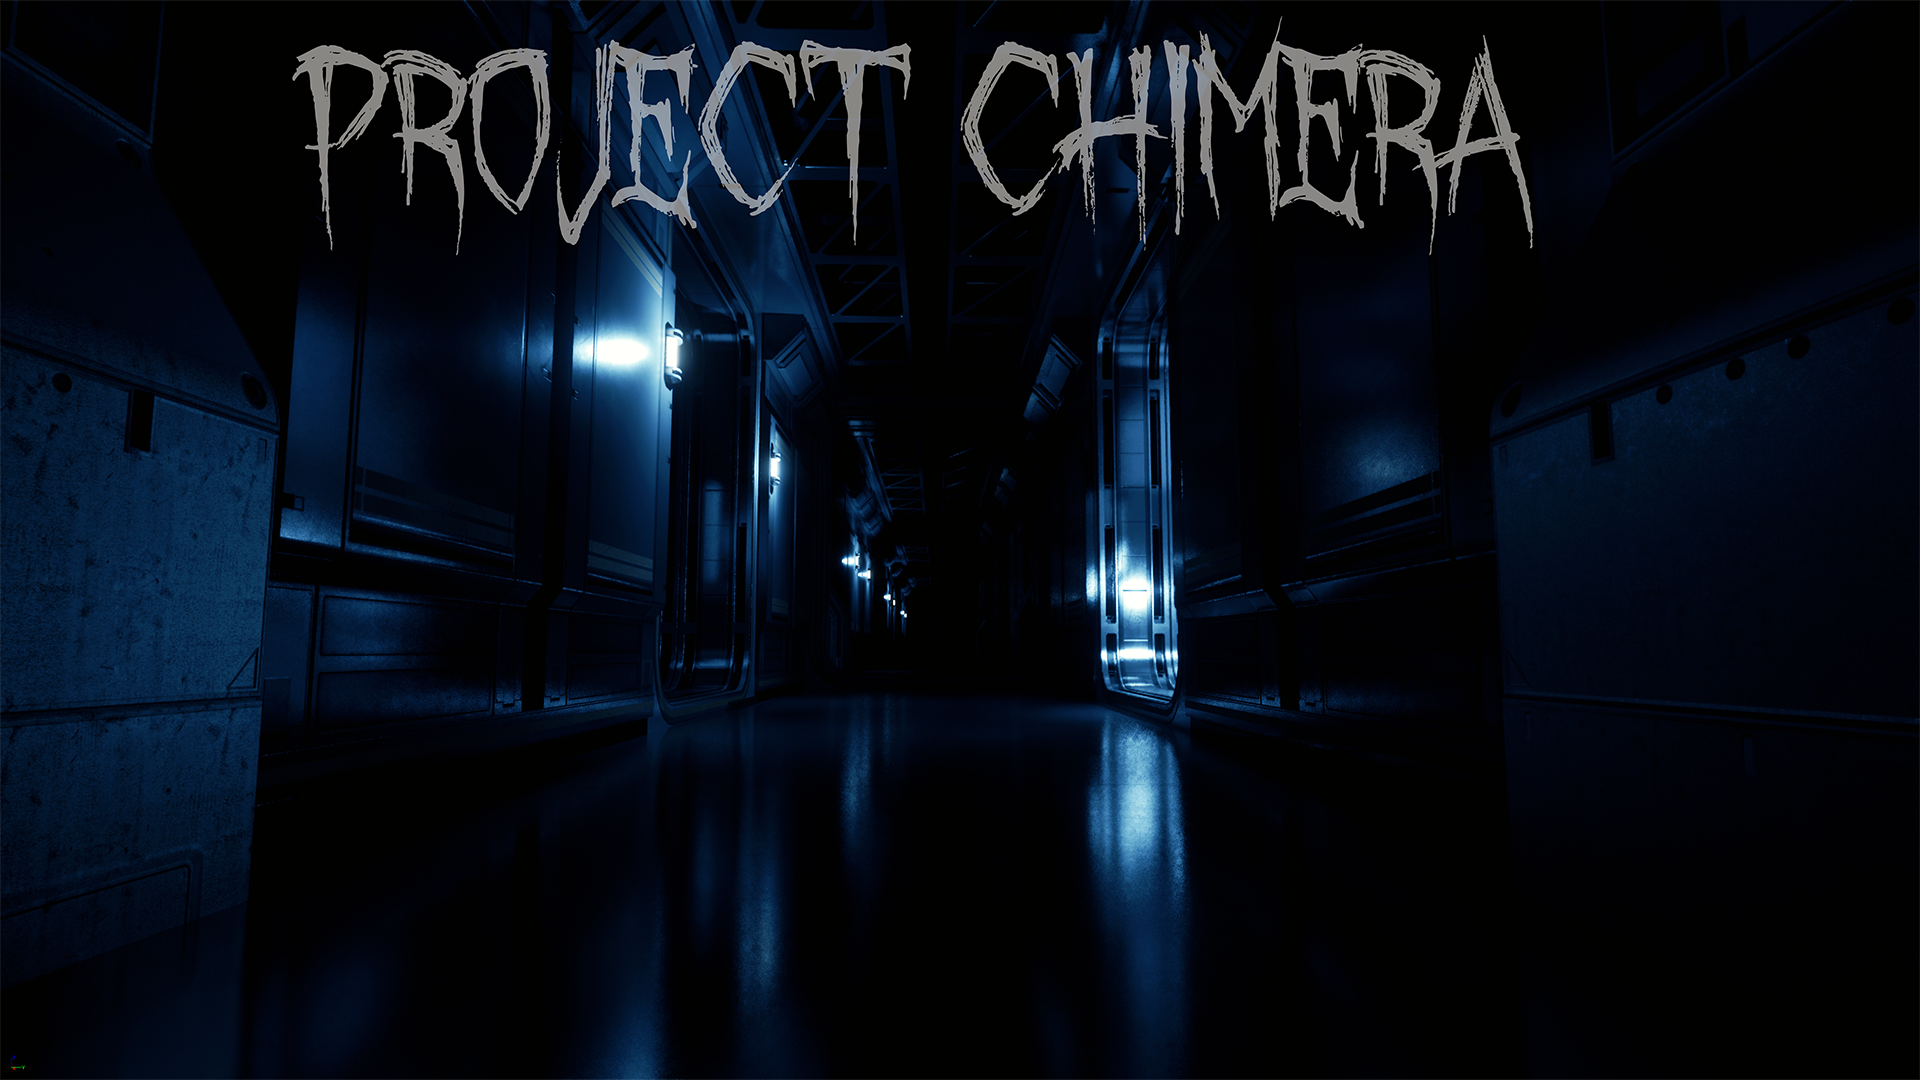 Project Chimera